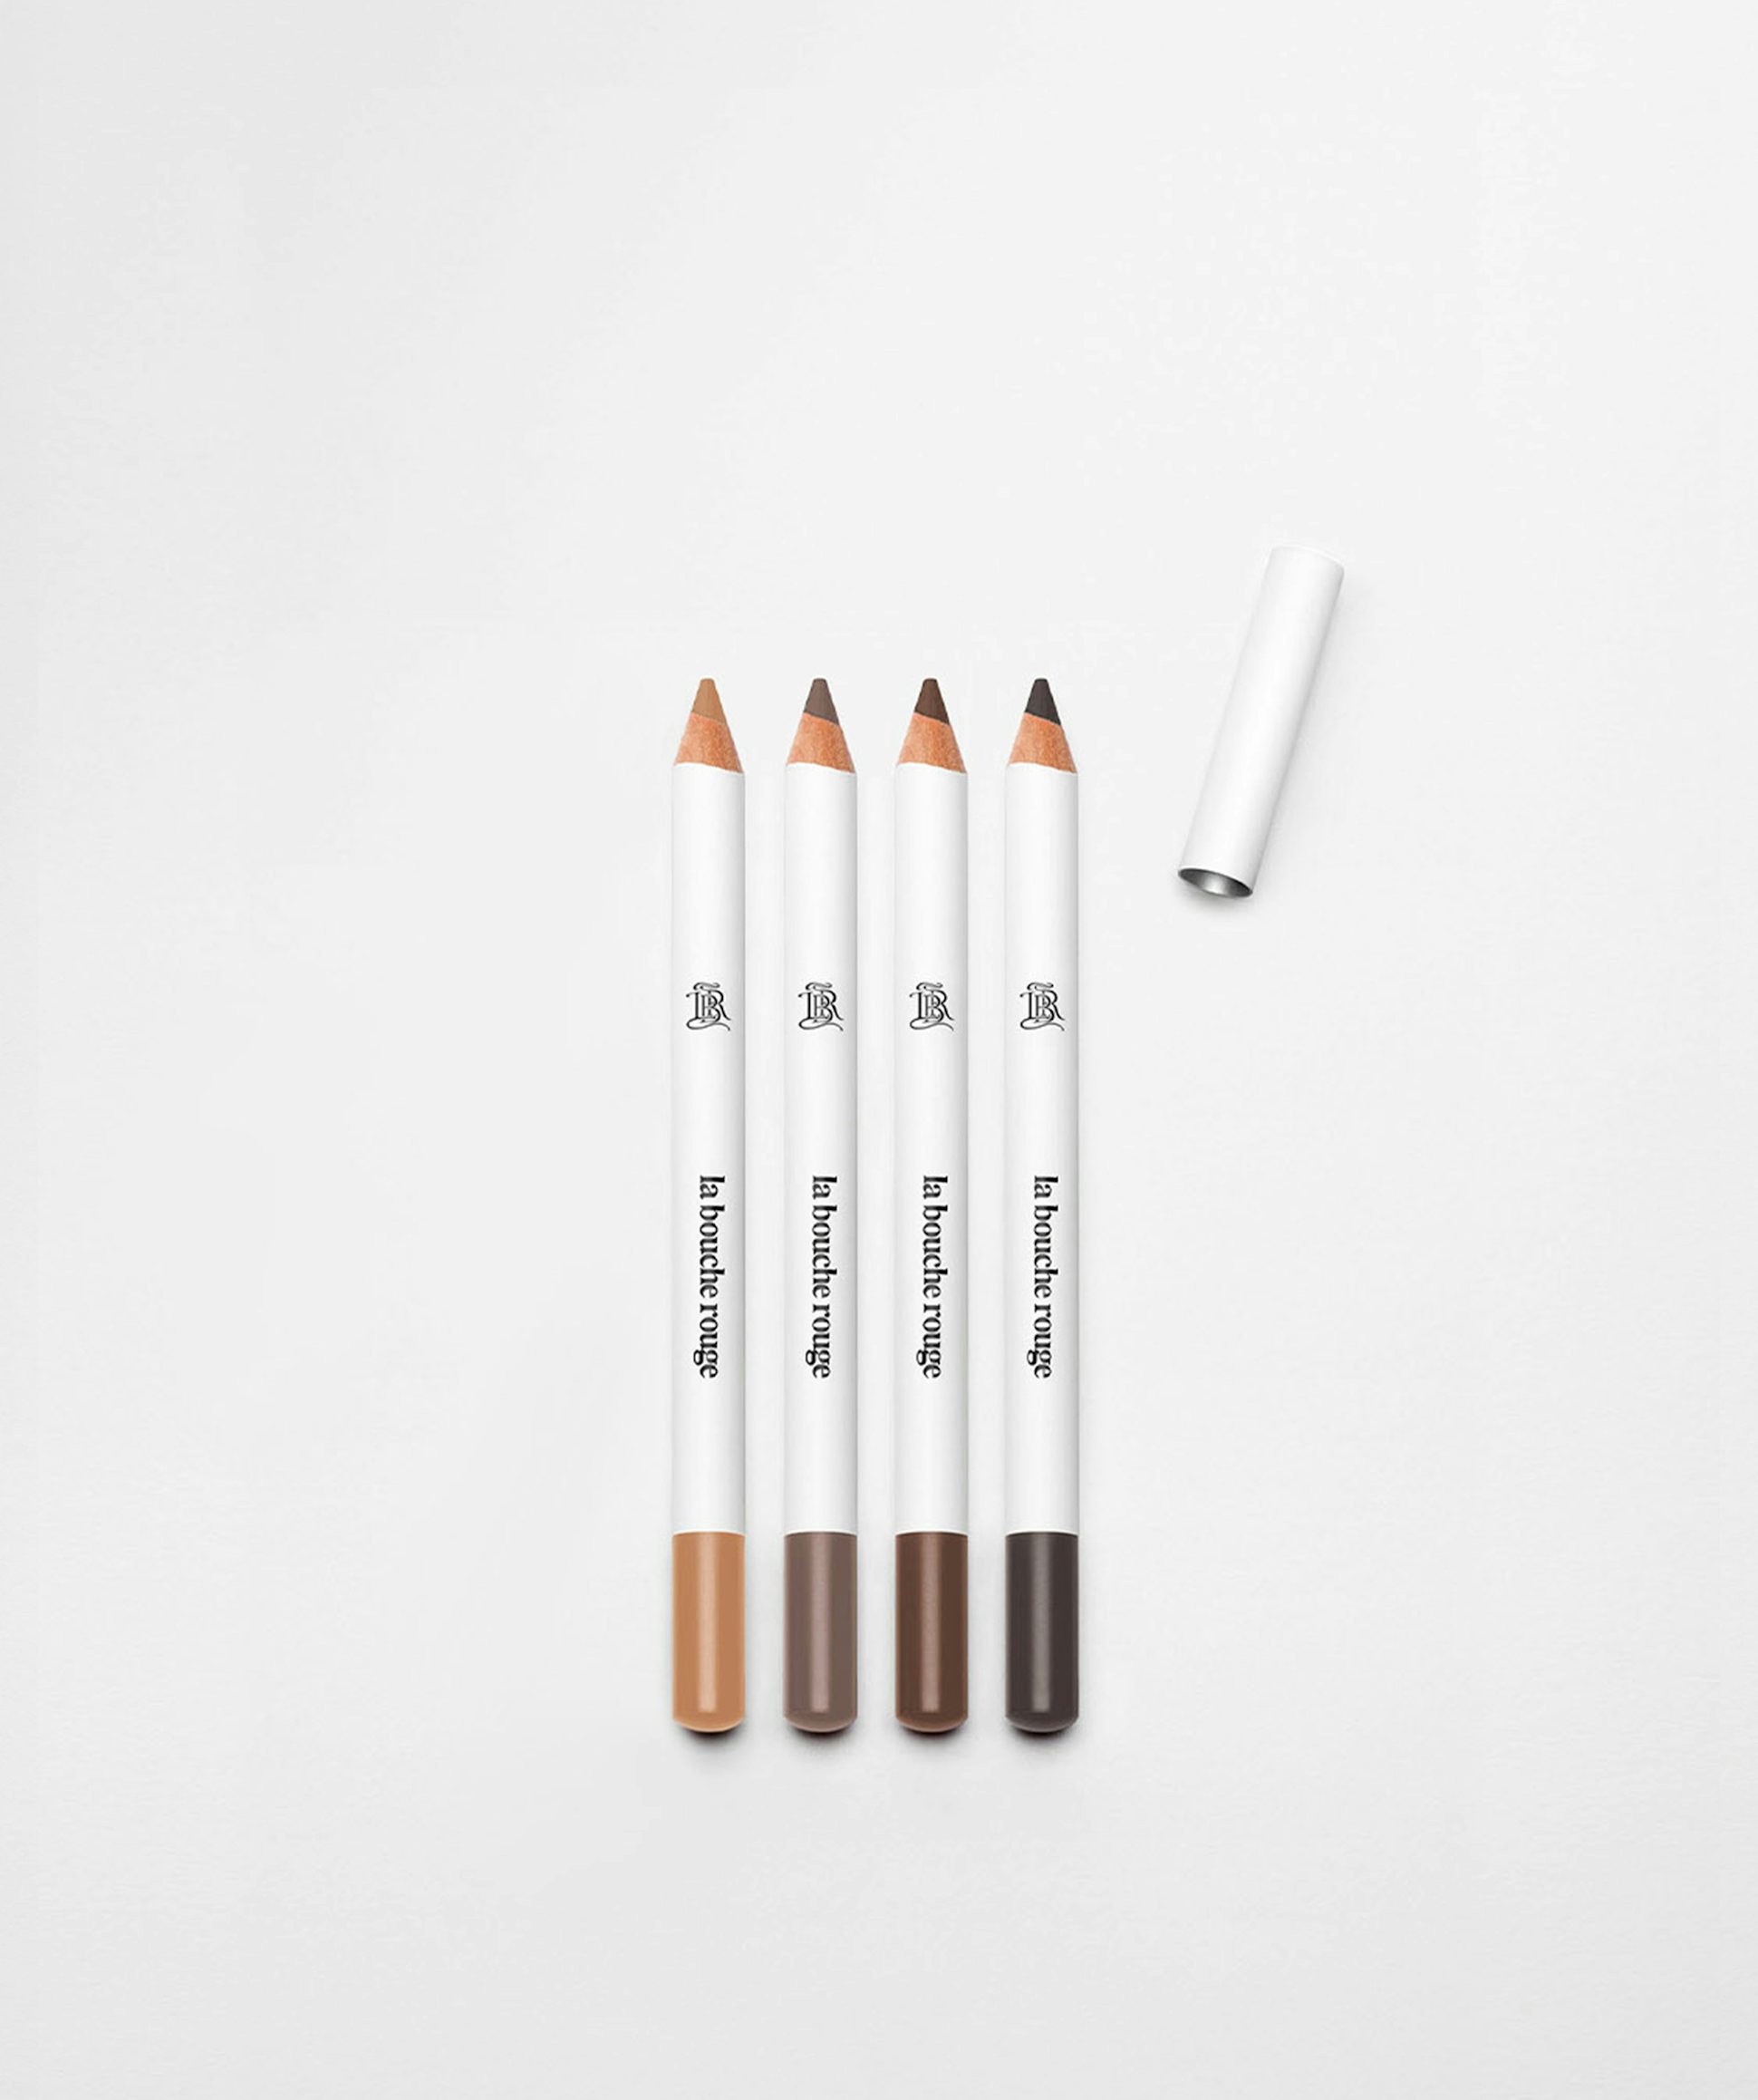 La bouche rouge, Paris Eyebrow pencils in blonde, light brown, dark brown and black